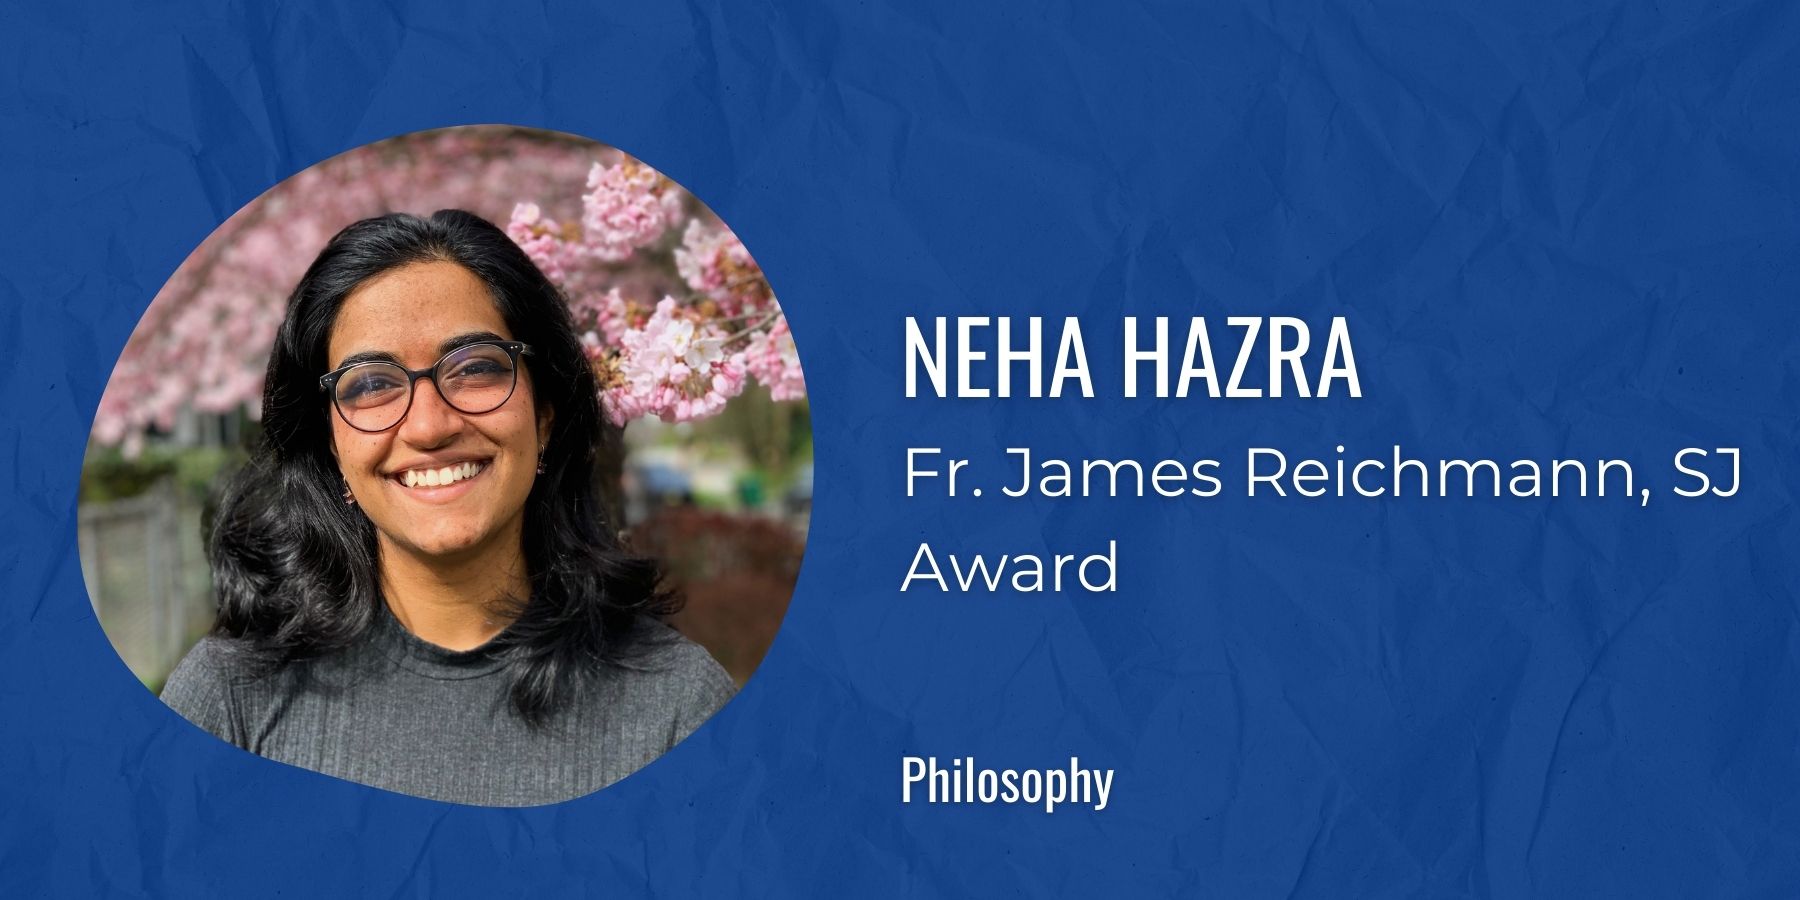 Image of Neha Hazra with text: Fr. James Reichmann, SJ Award, Philosophy
